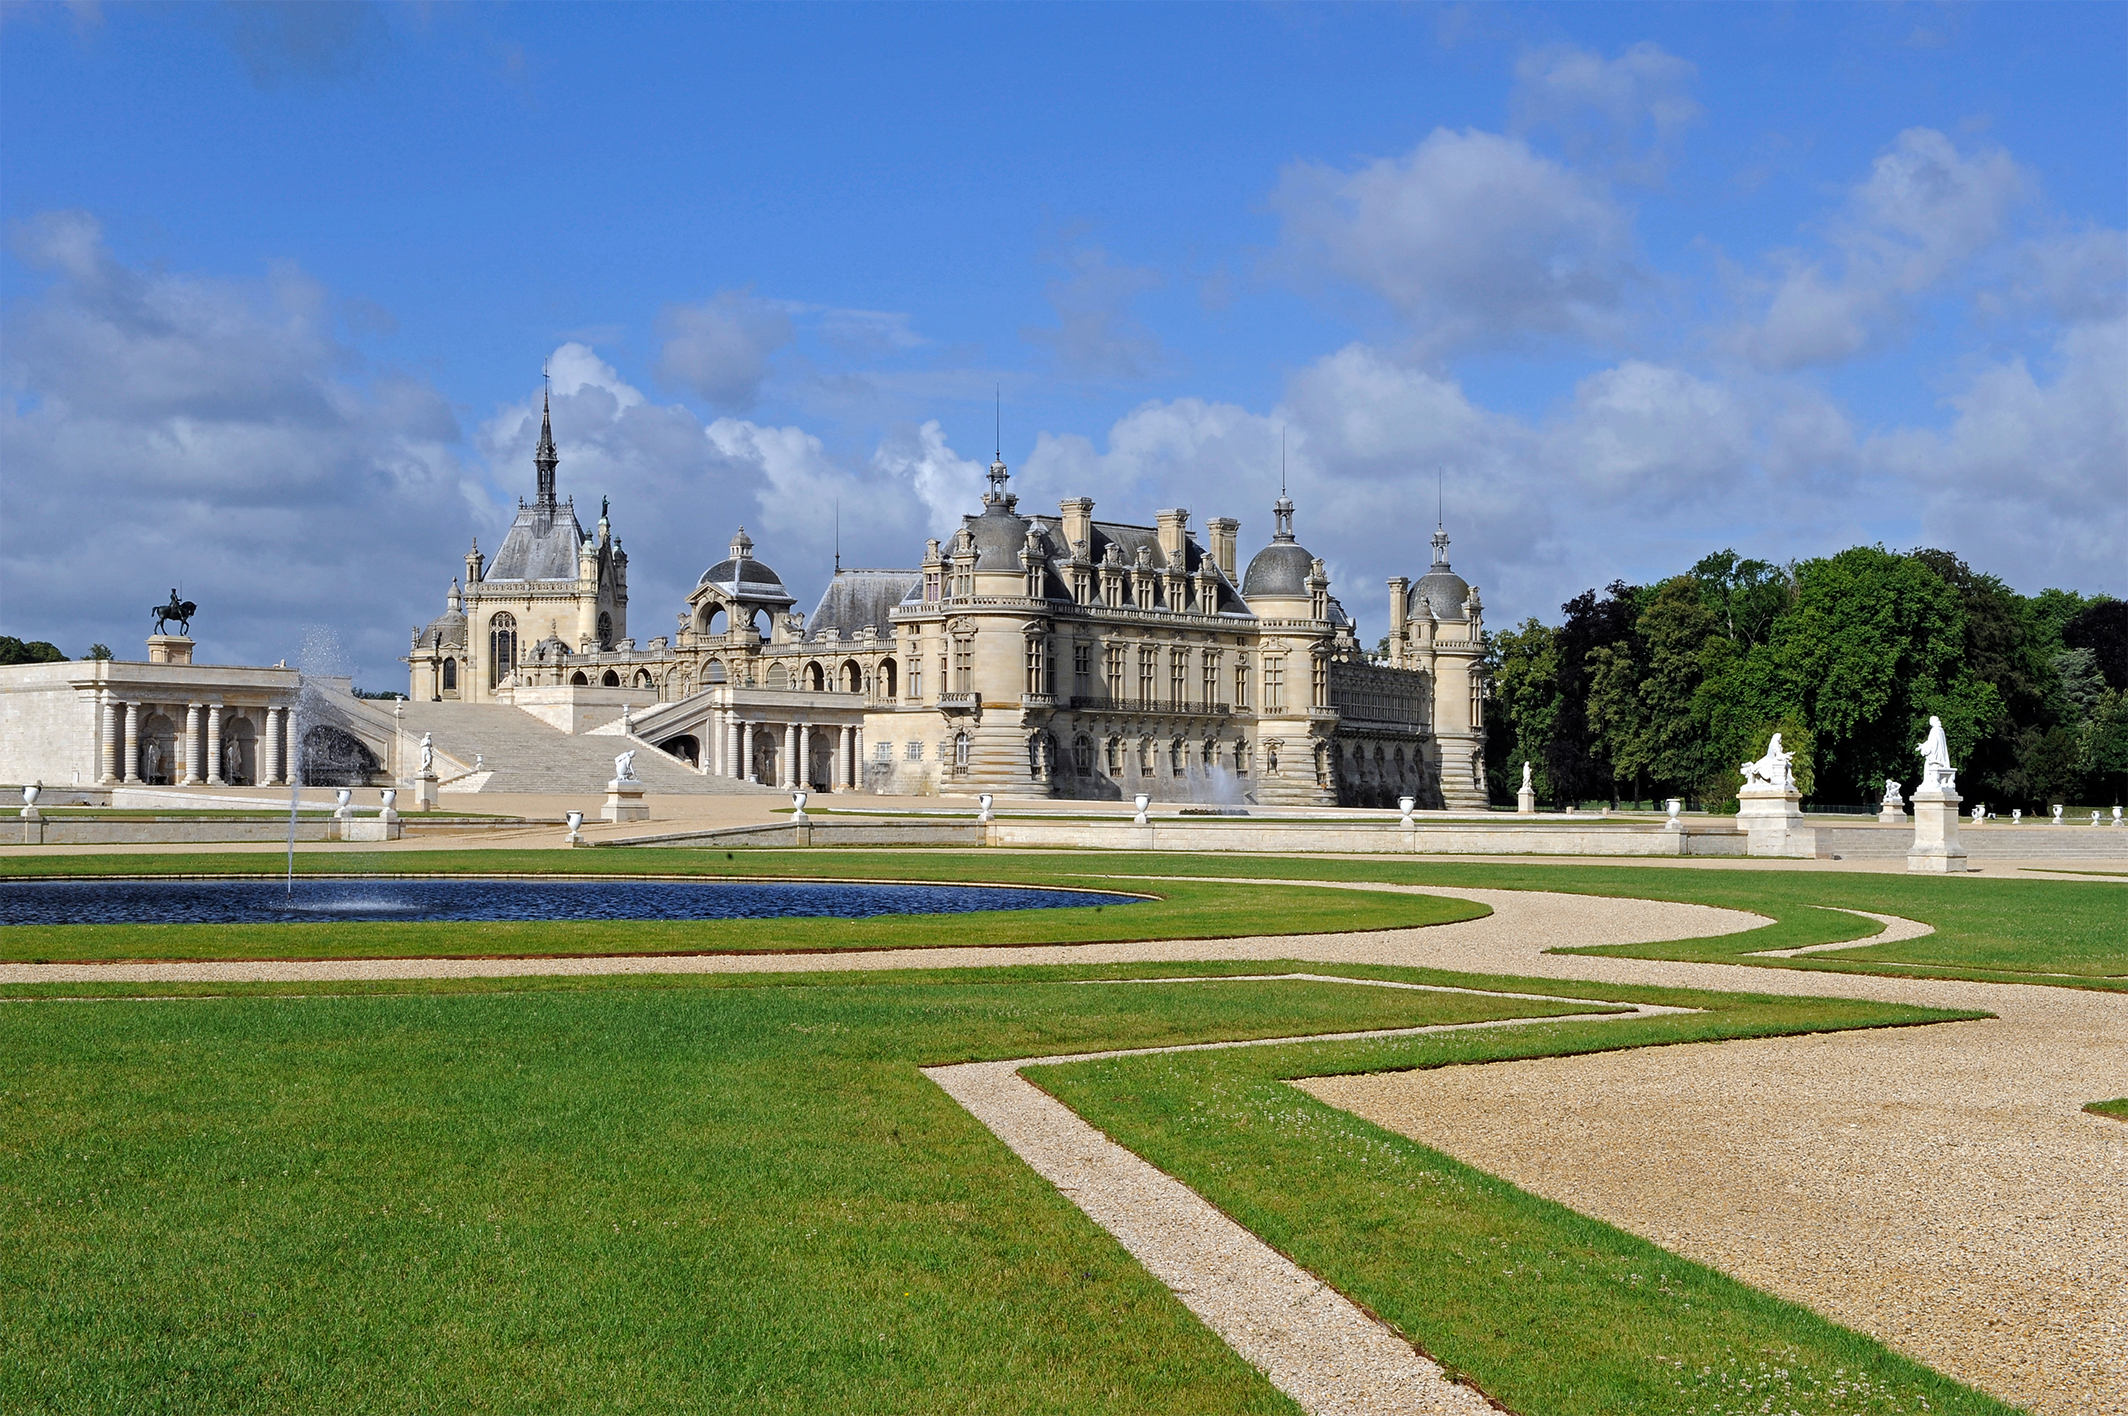 Château de Chantilly, Chantilly, France — Google Arts & Culture